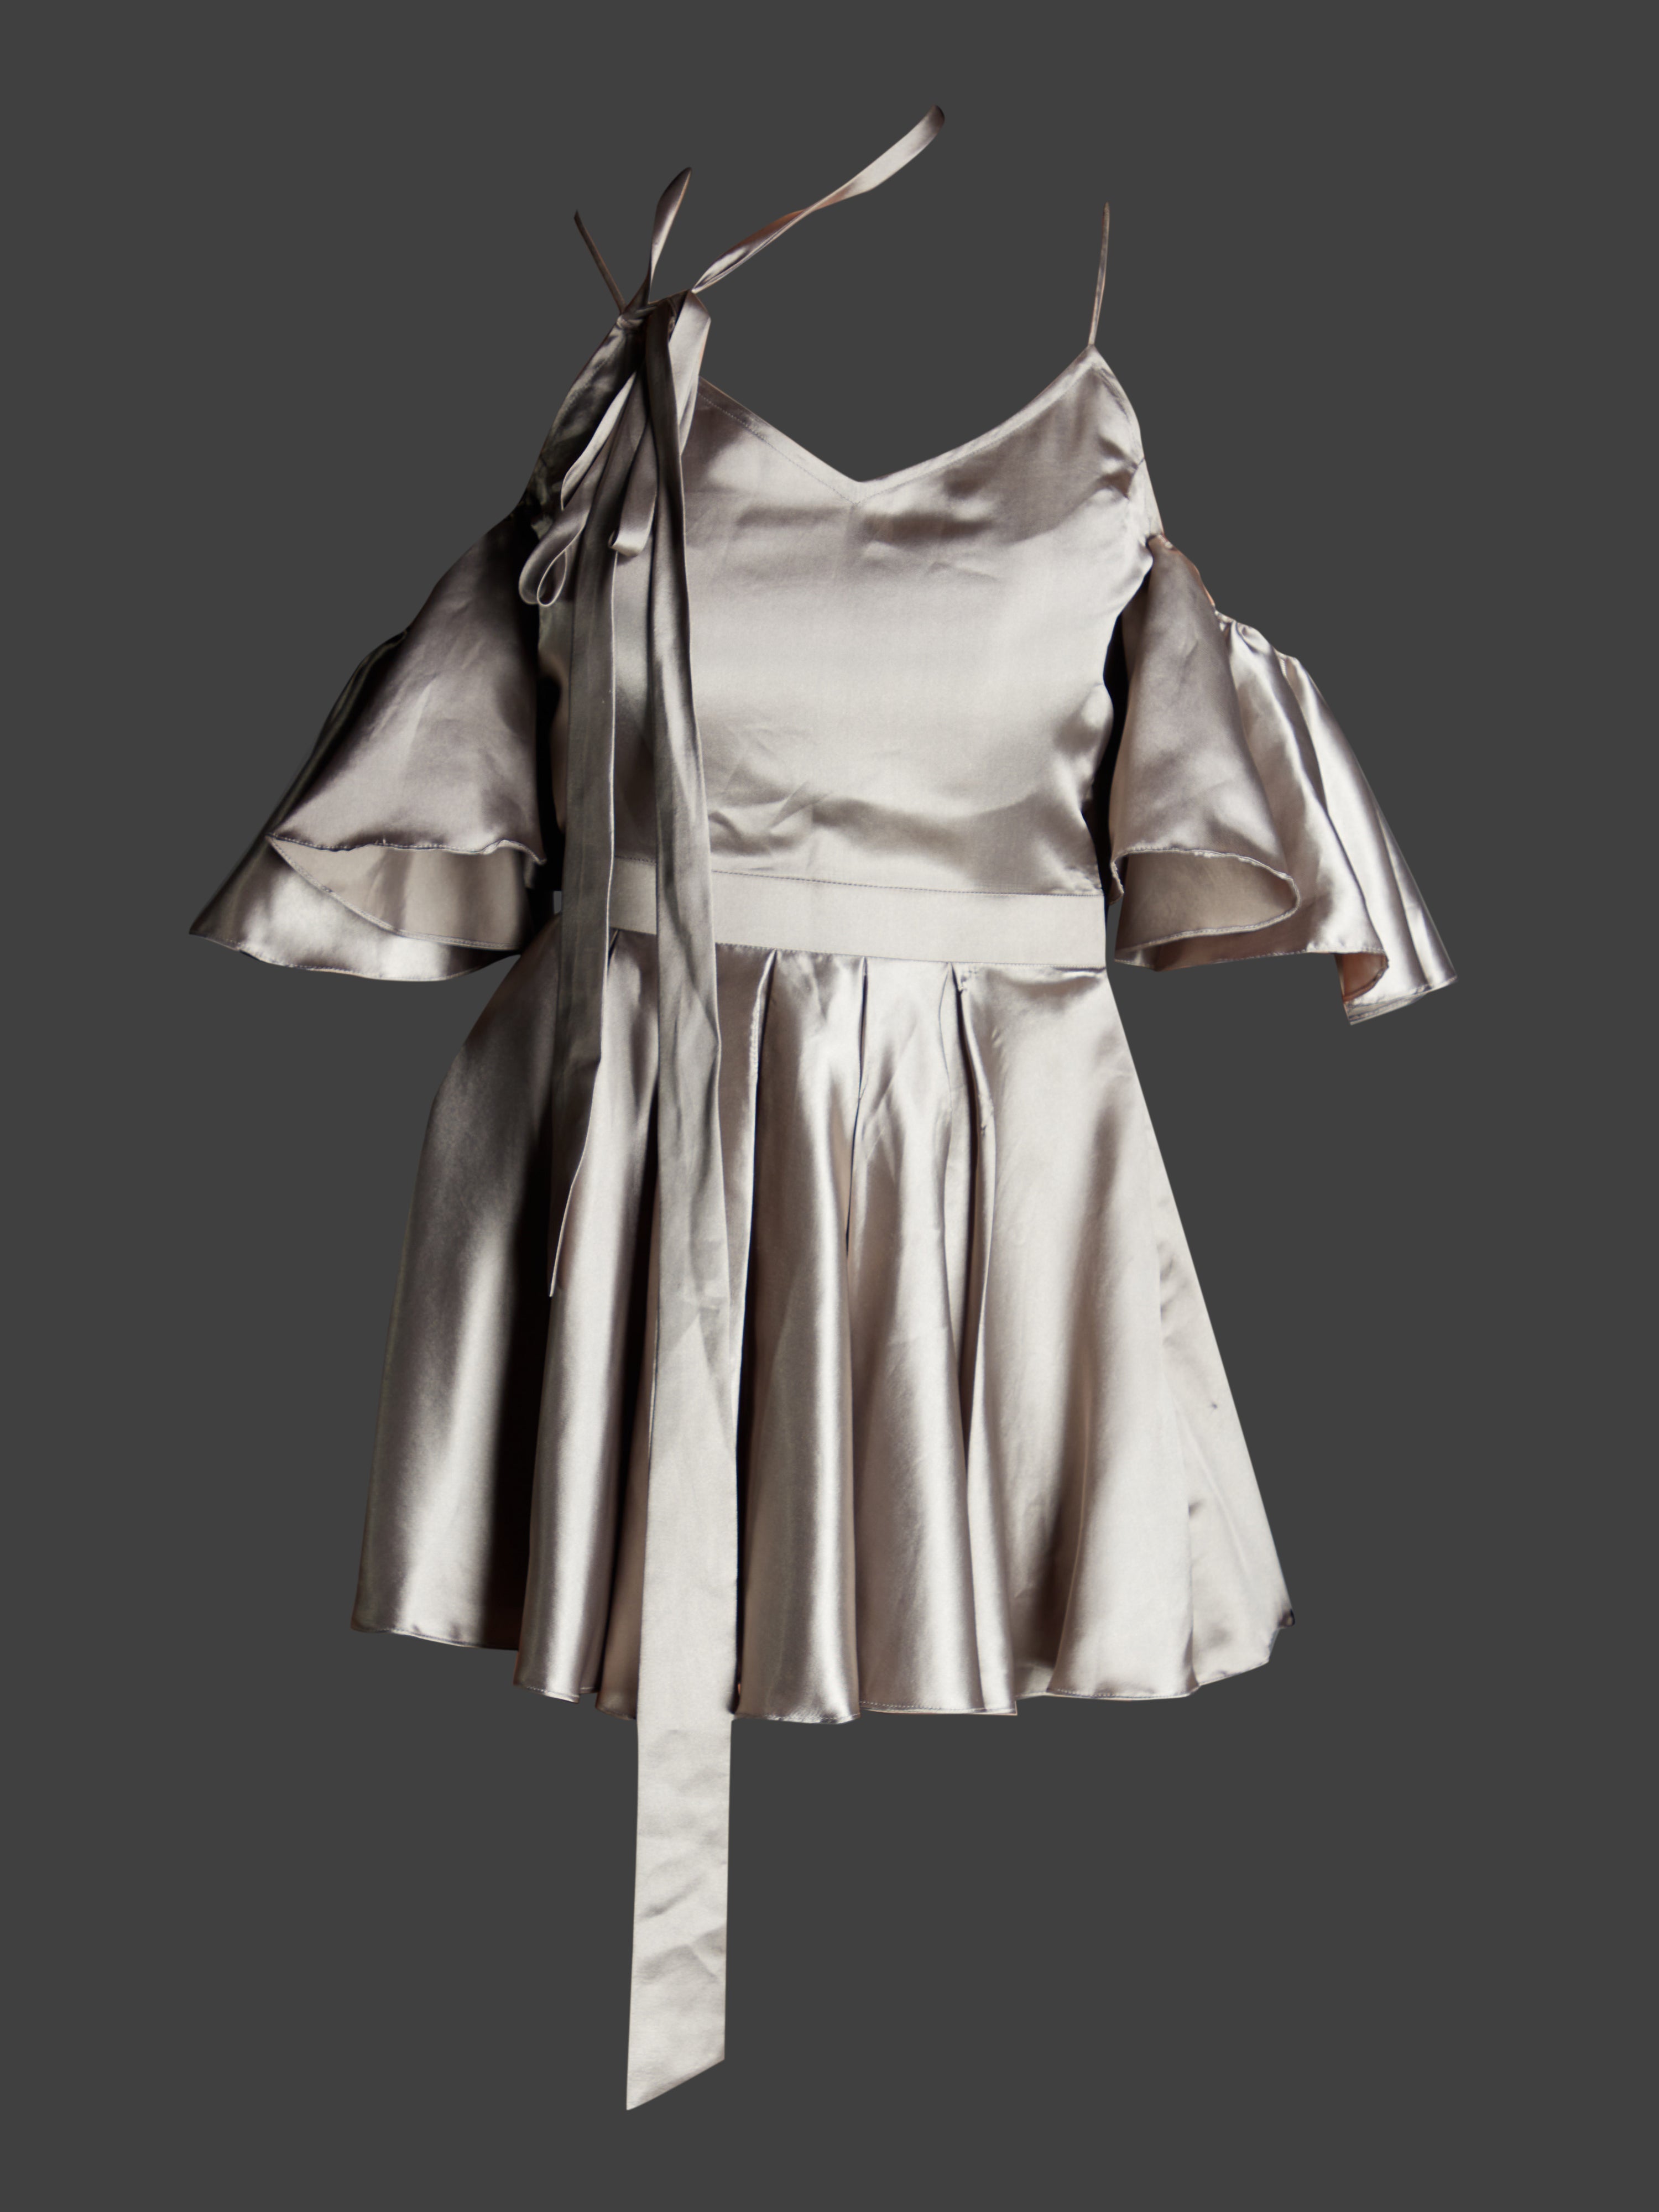 Short Cold Shoulder Silver Dress With Neck Tie Up